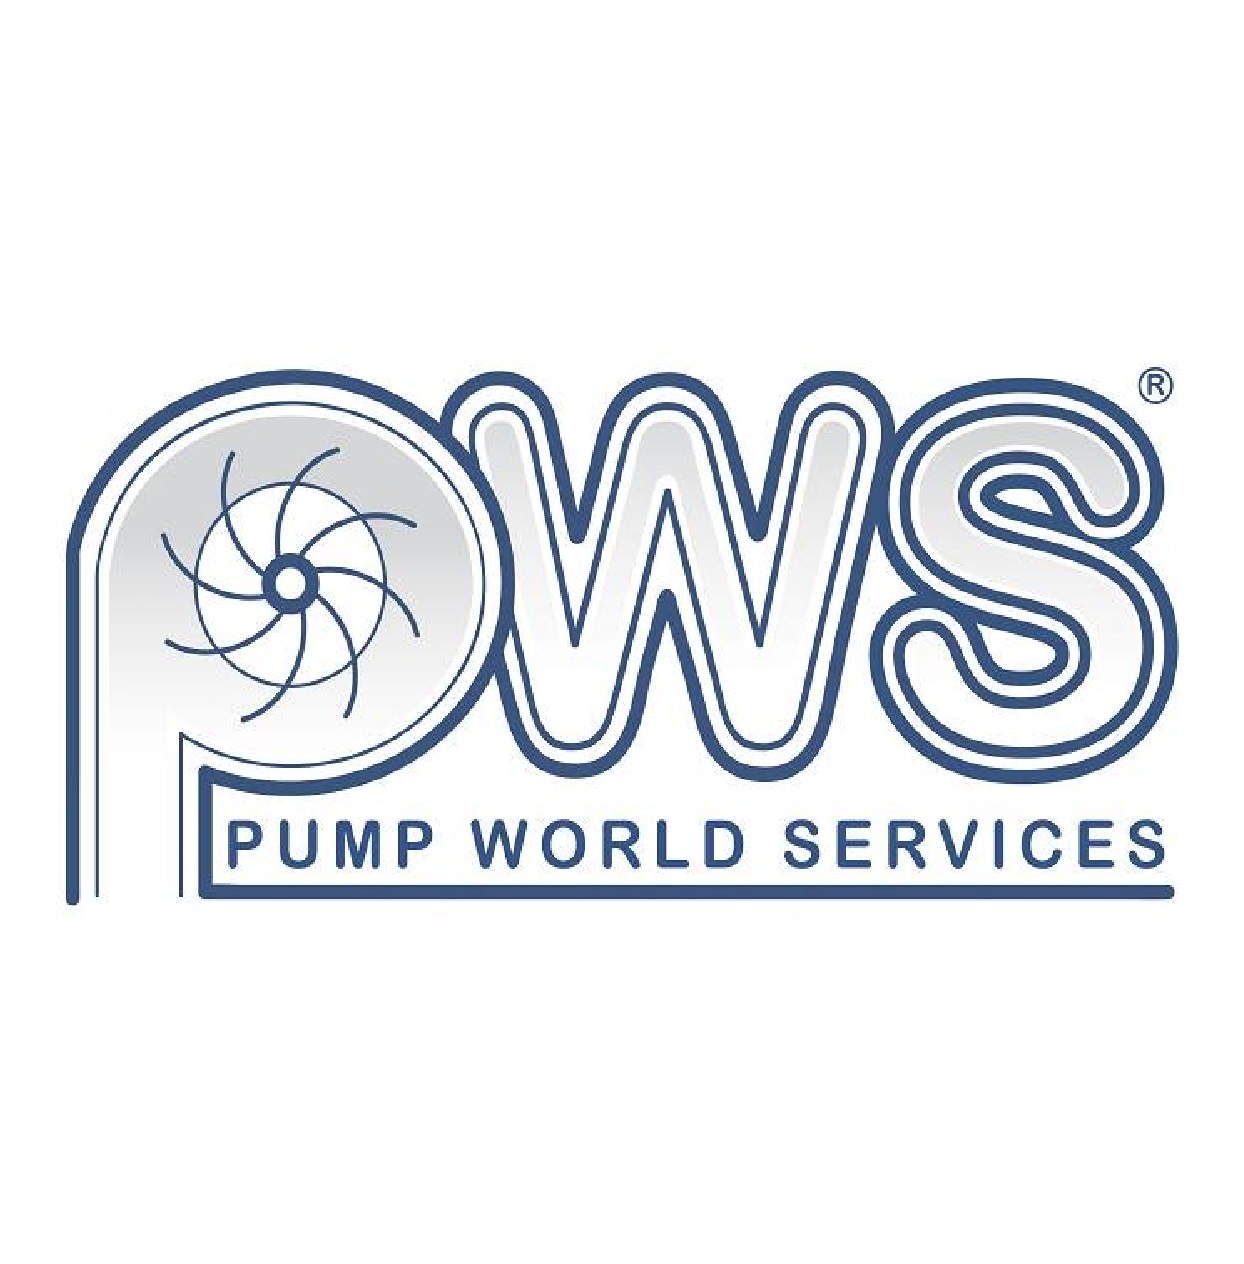 Pump World Services